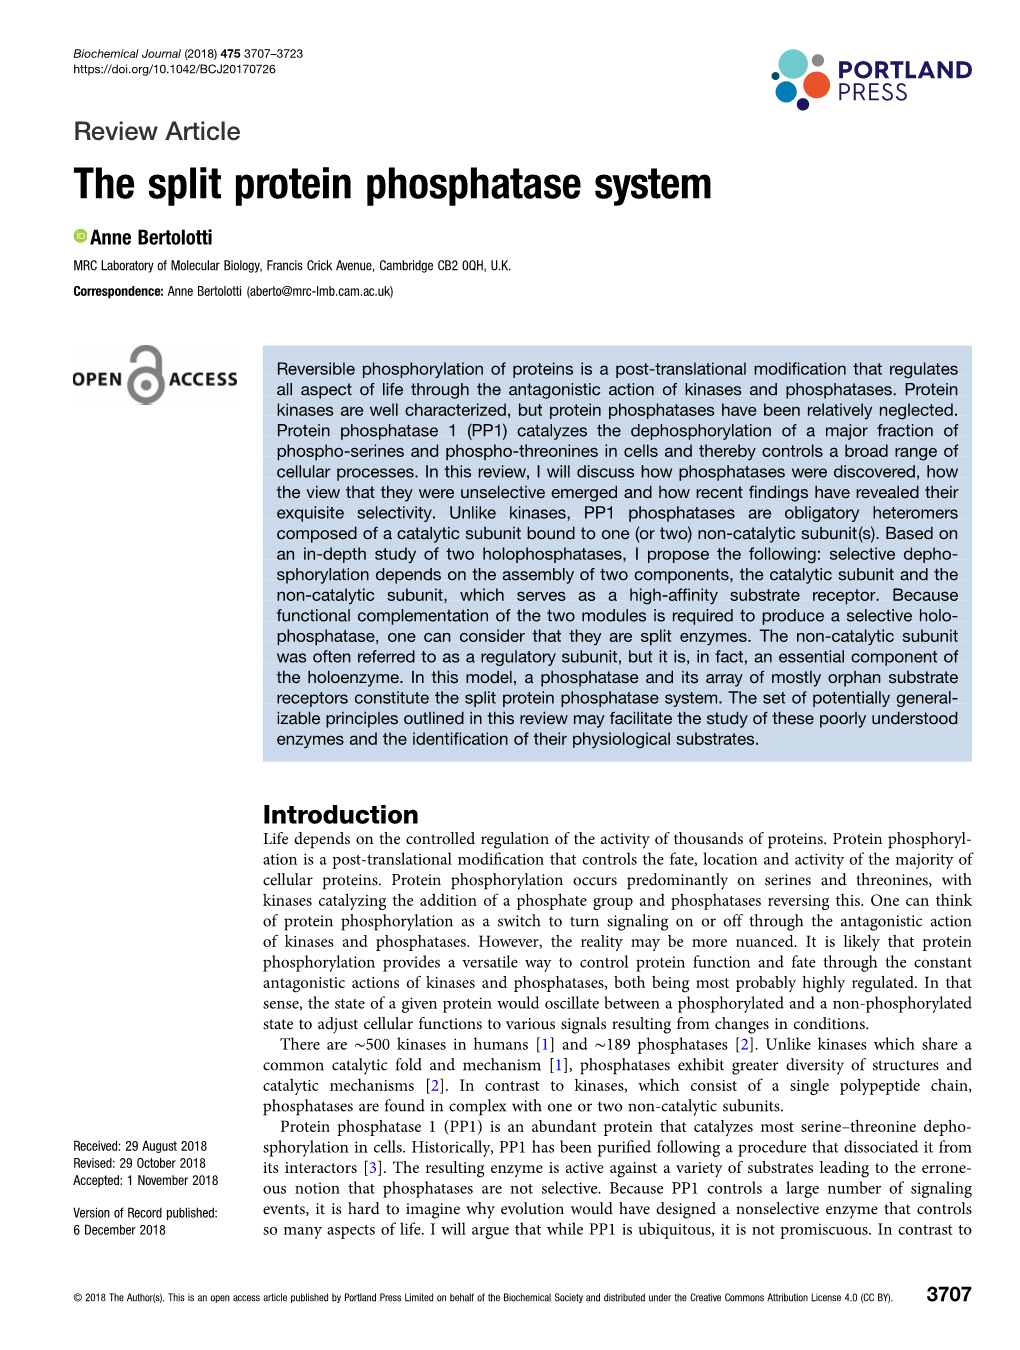 The Split Protein Phosphatase System